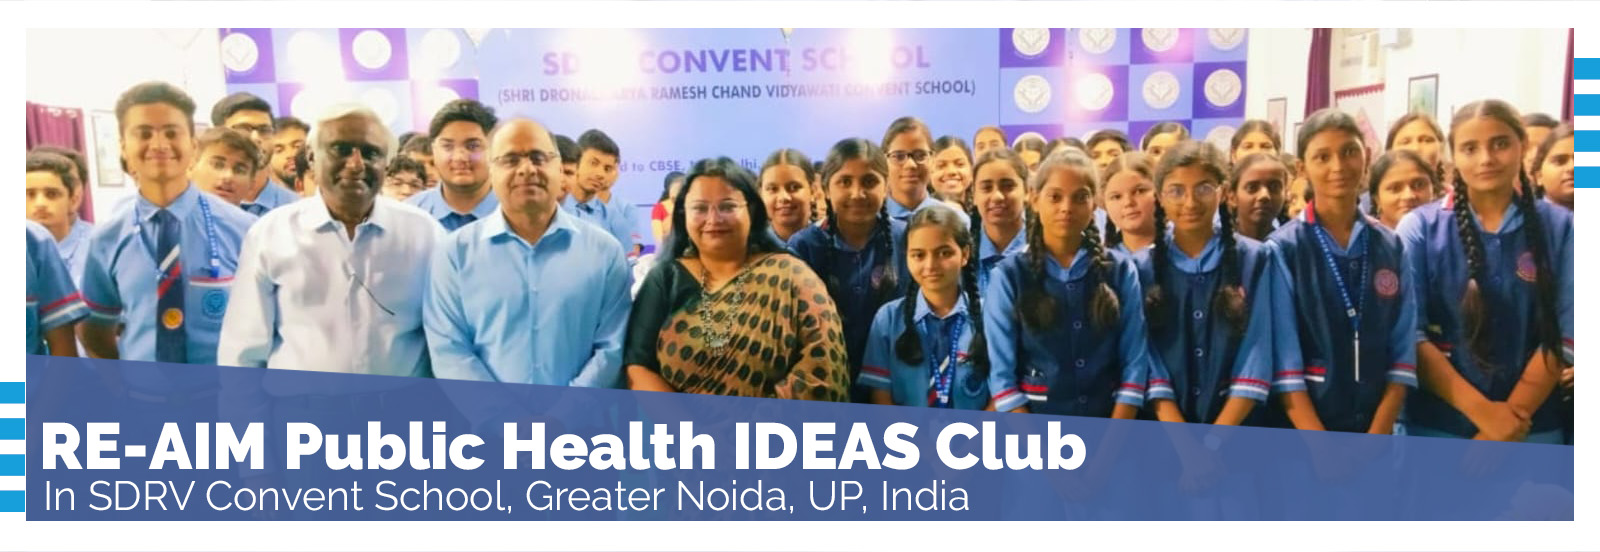 RE-AIM Public Health IDEA Club in SDRV Convent School, Greater Noida, UP, India